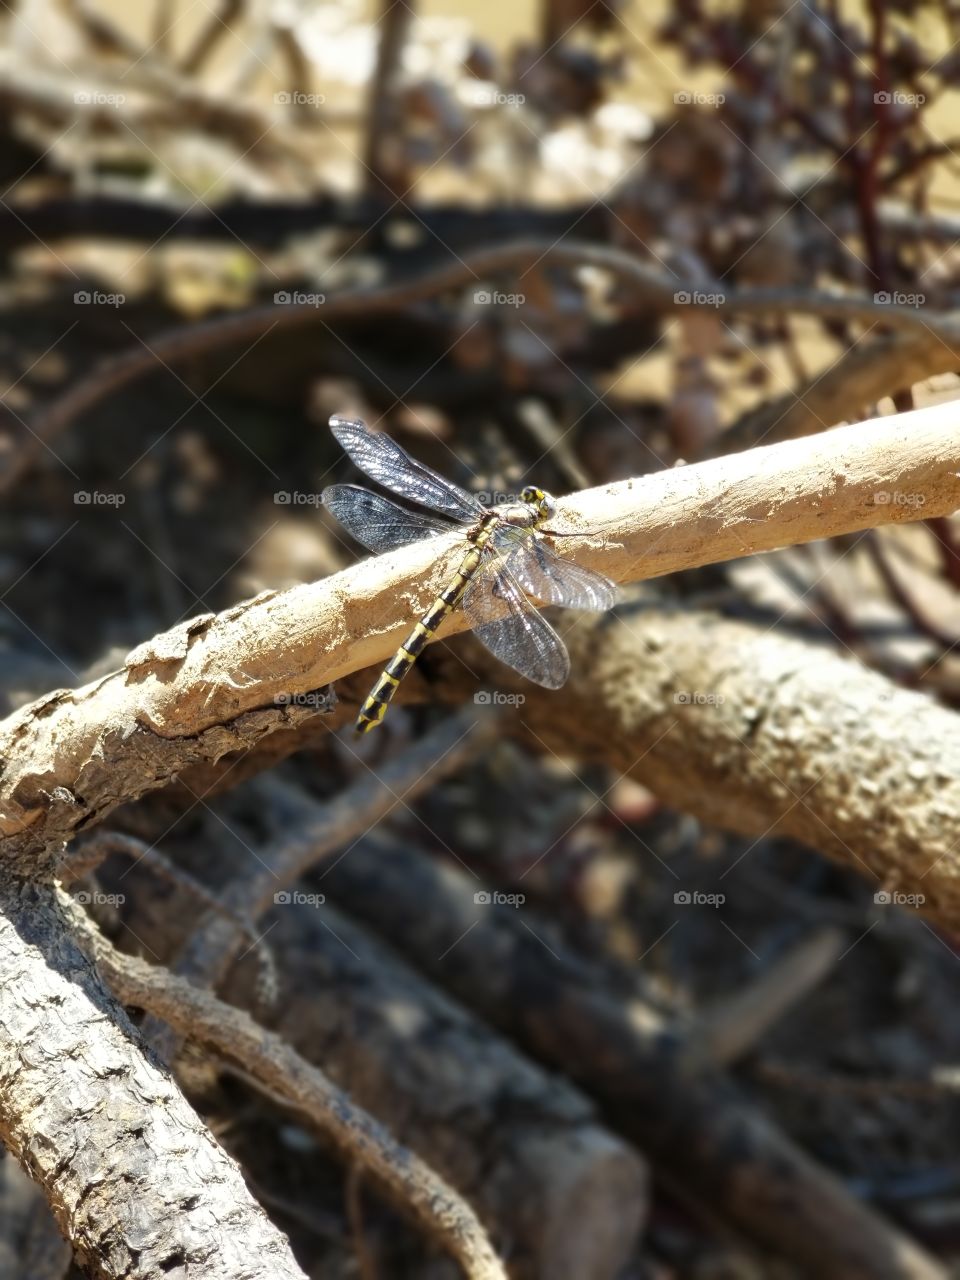 Dragonfly on stick